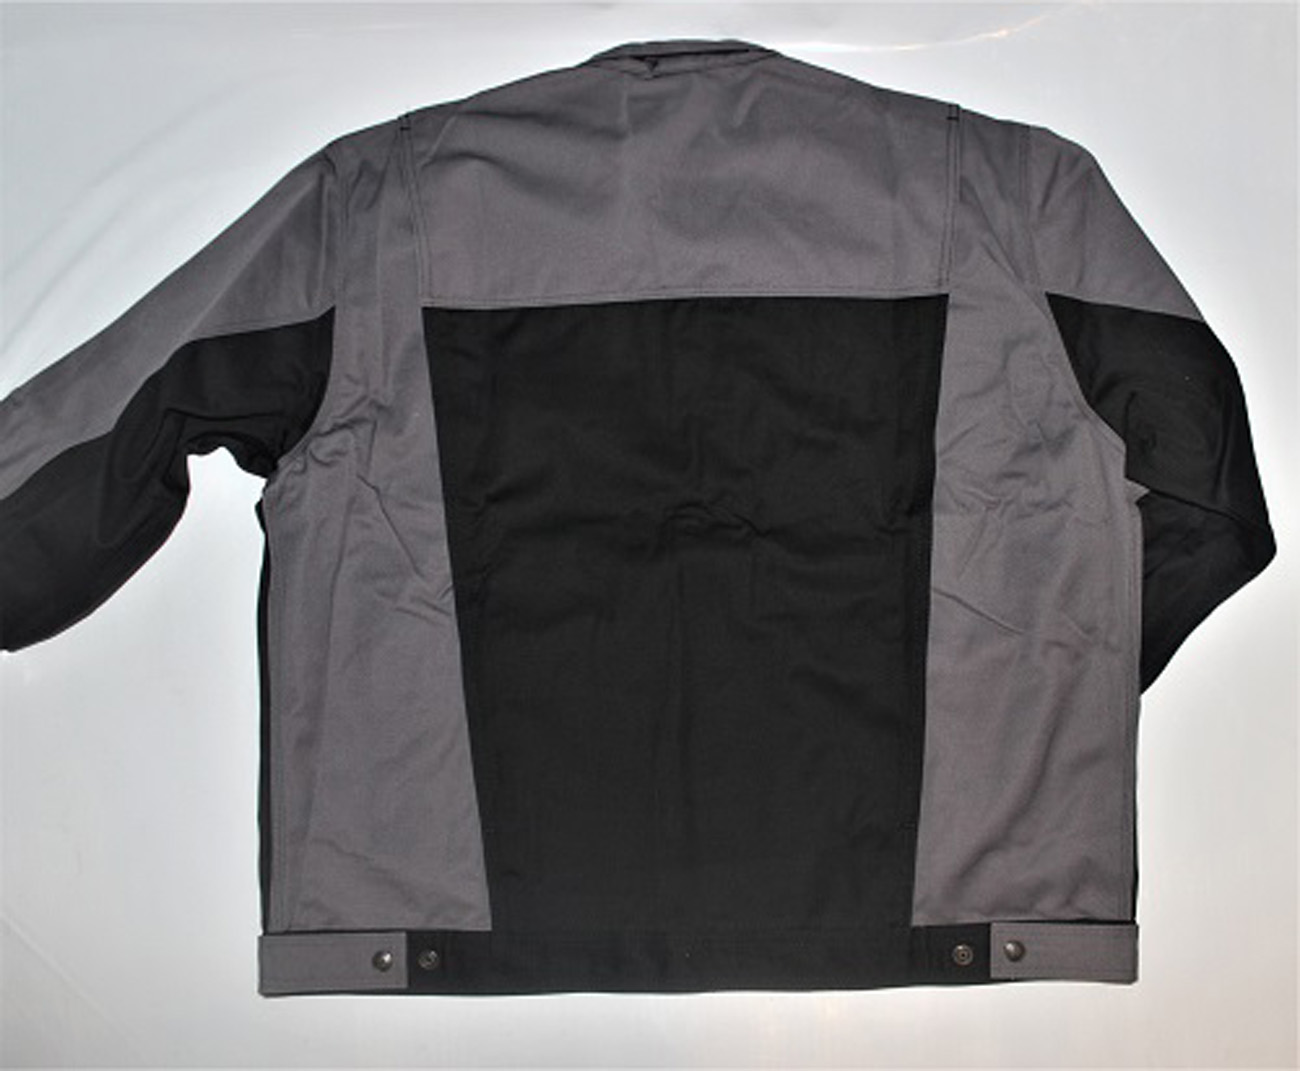 ENGEL Bundjacke Enterprise Jacke Arbeitsjacke schwarz/grau Nr. 1600-780